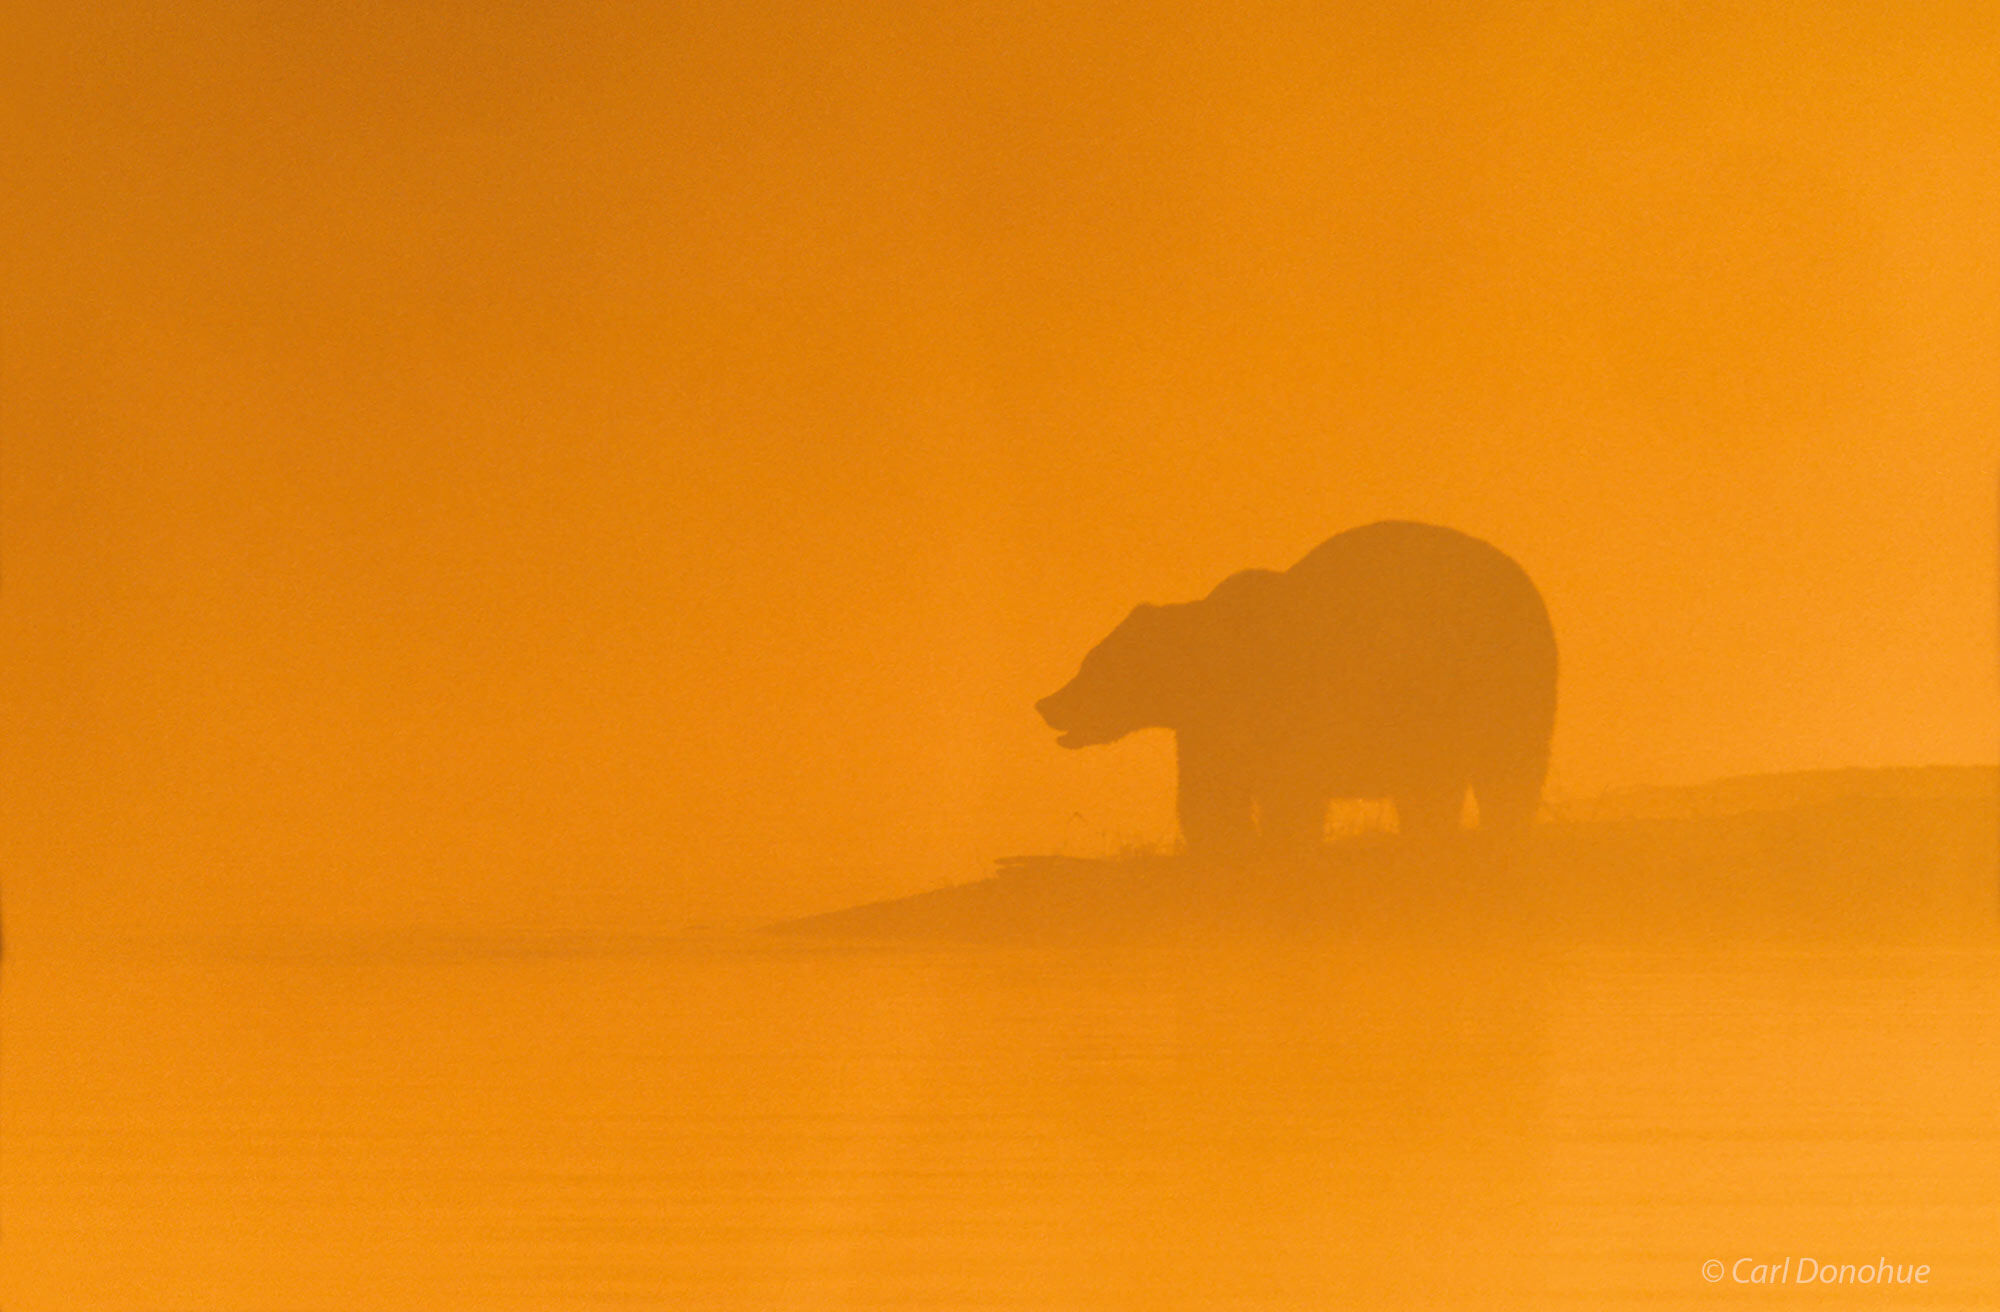 Grizzly Bear, silhouette against dawn light and morning fog, Brooks River, Katmai National Park, Alaska. Ursus arctos